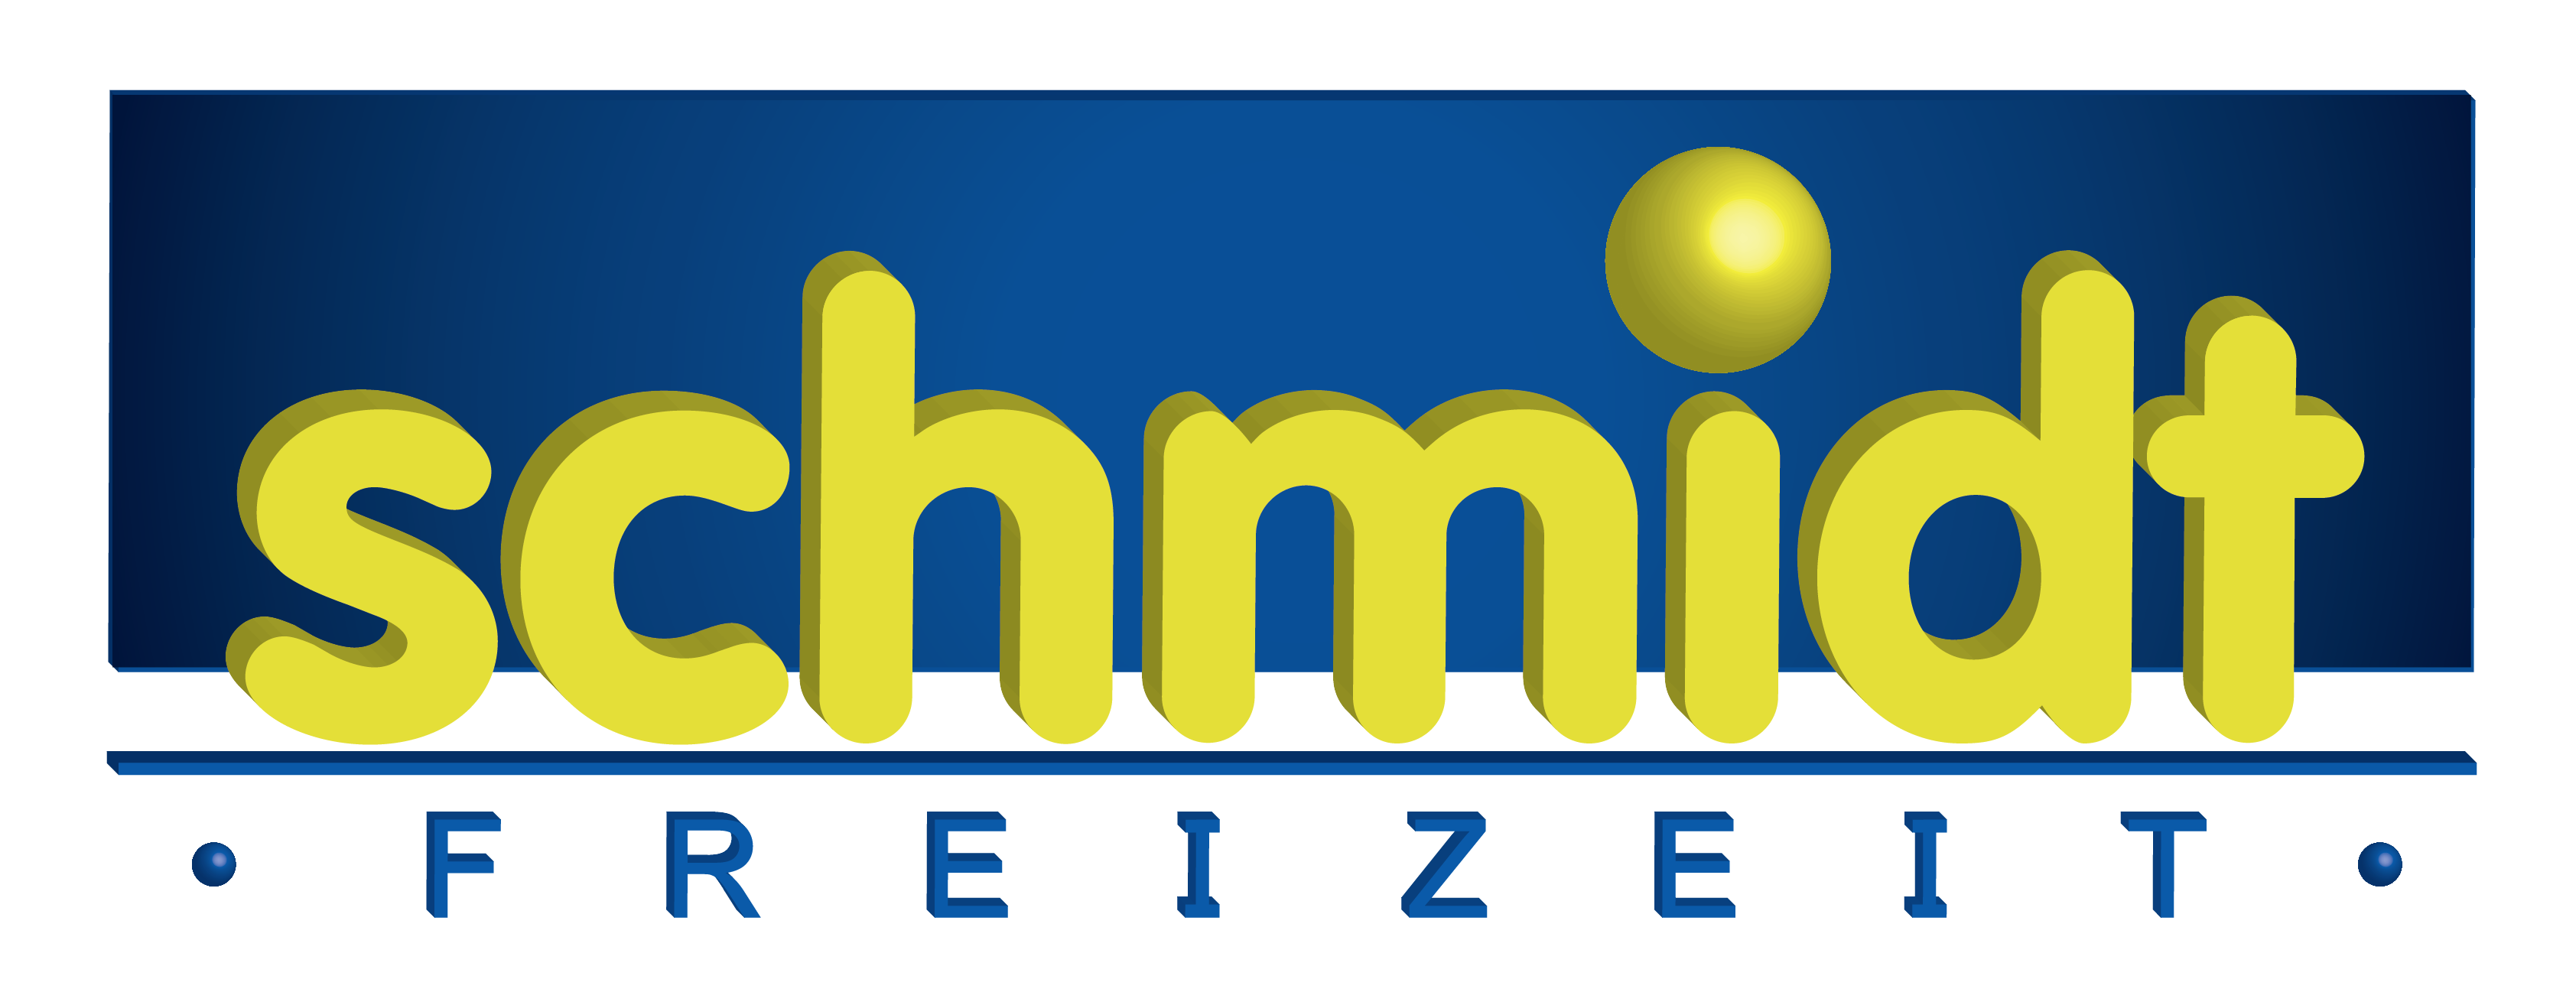 Schmidt FREIZEIT Coupons & Promo Codes